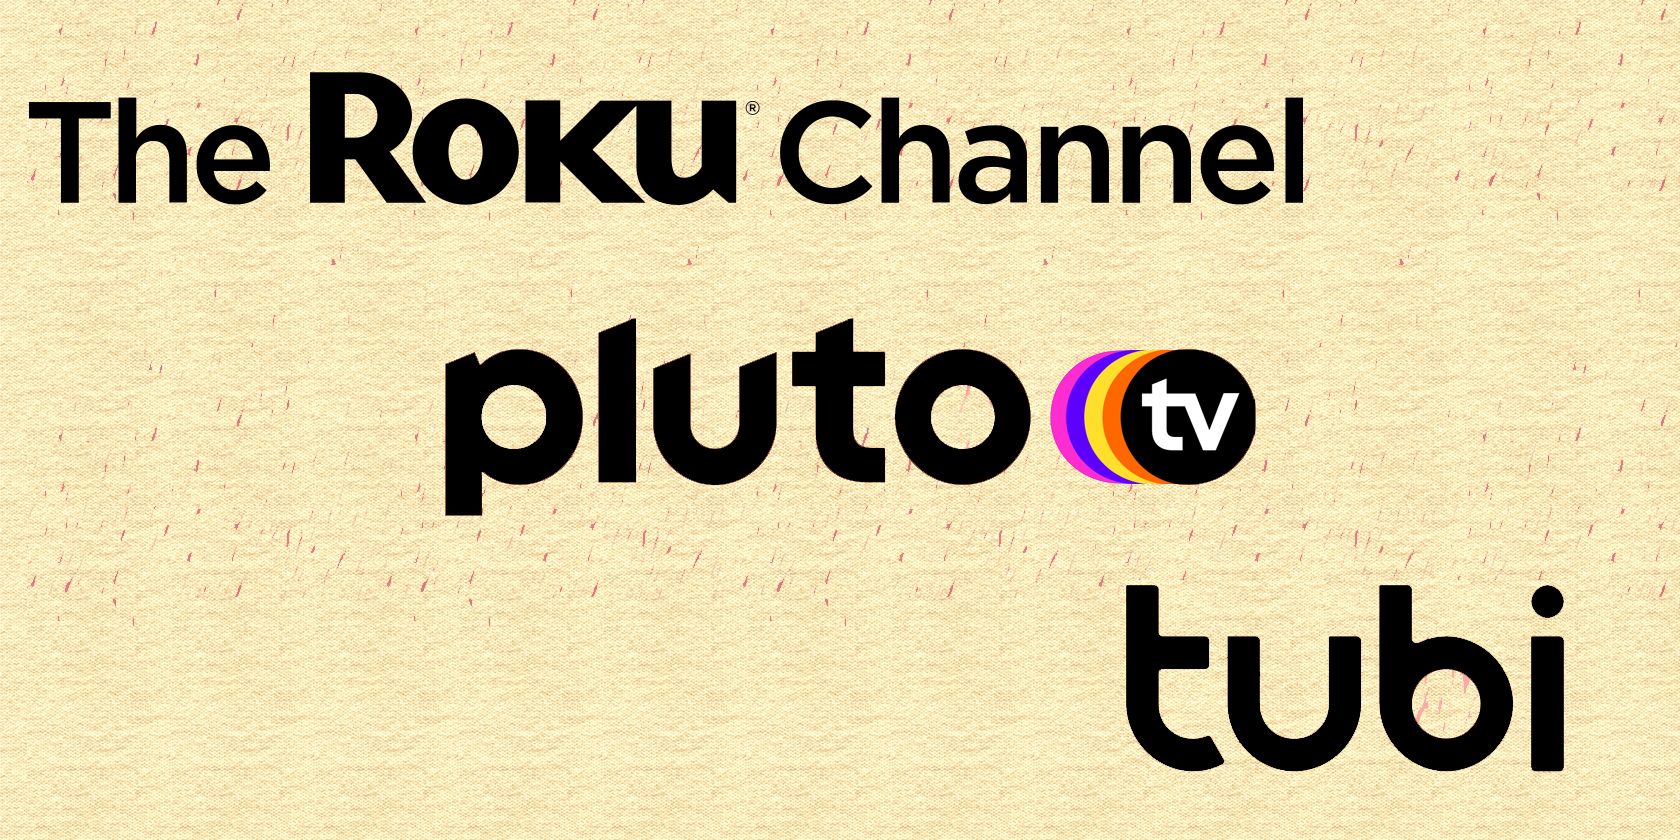 The Roku Channel vs